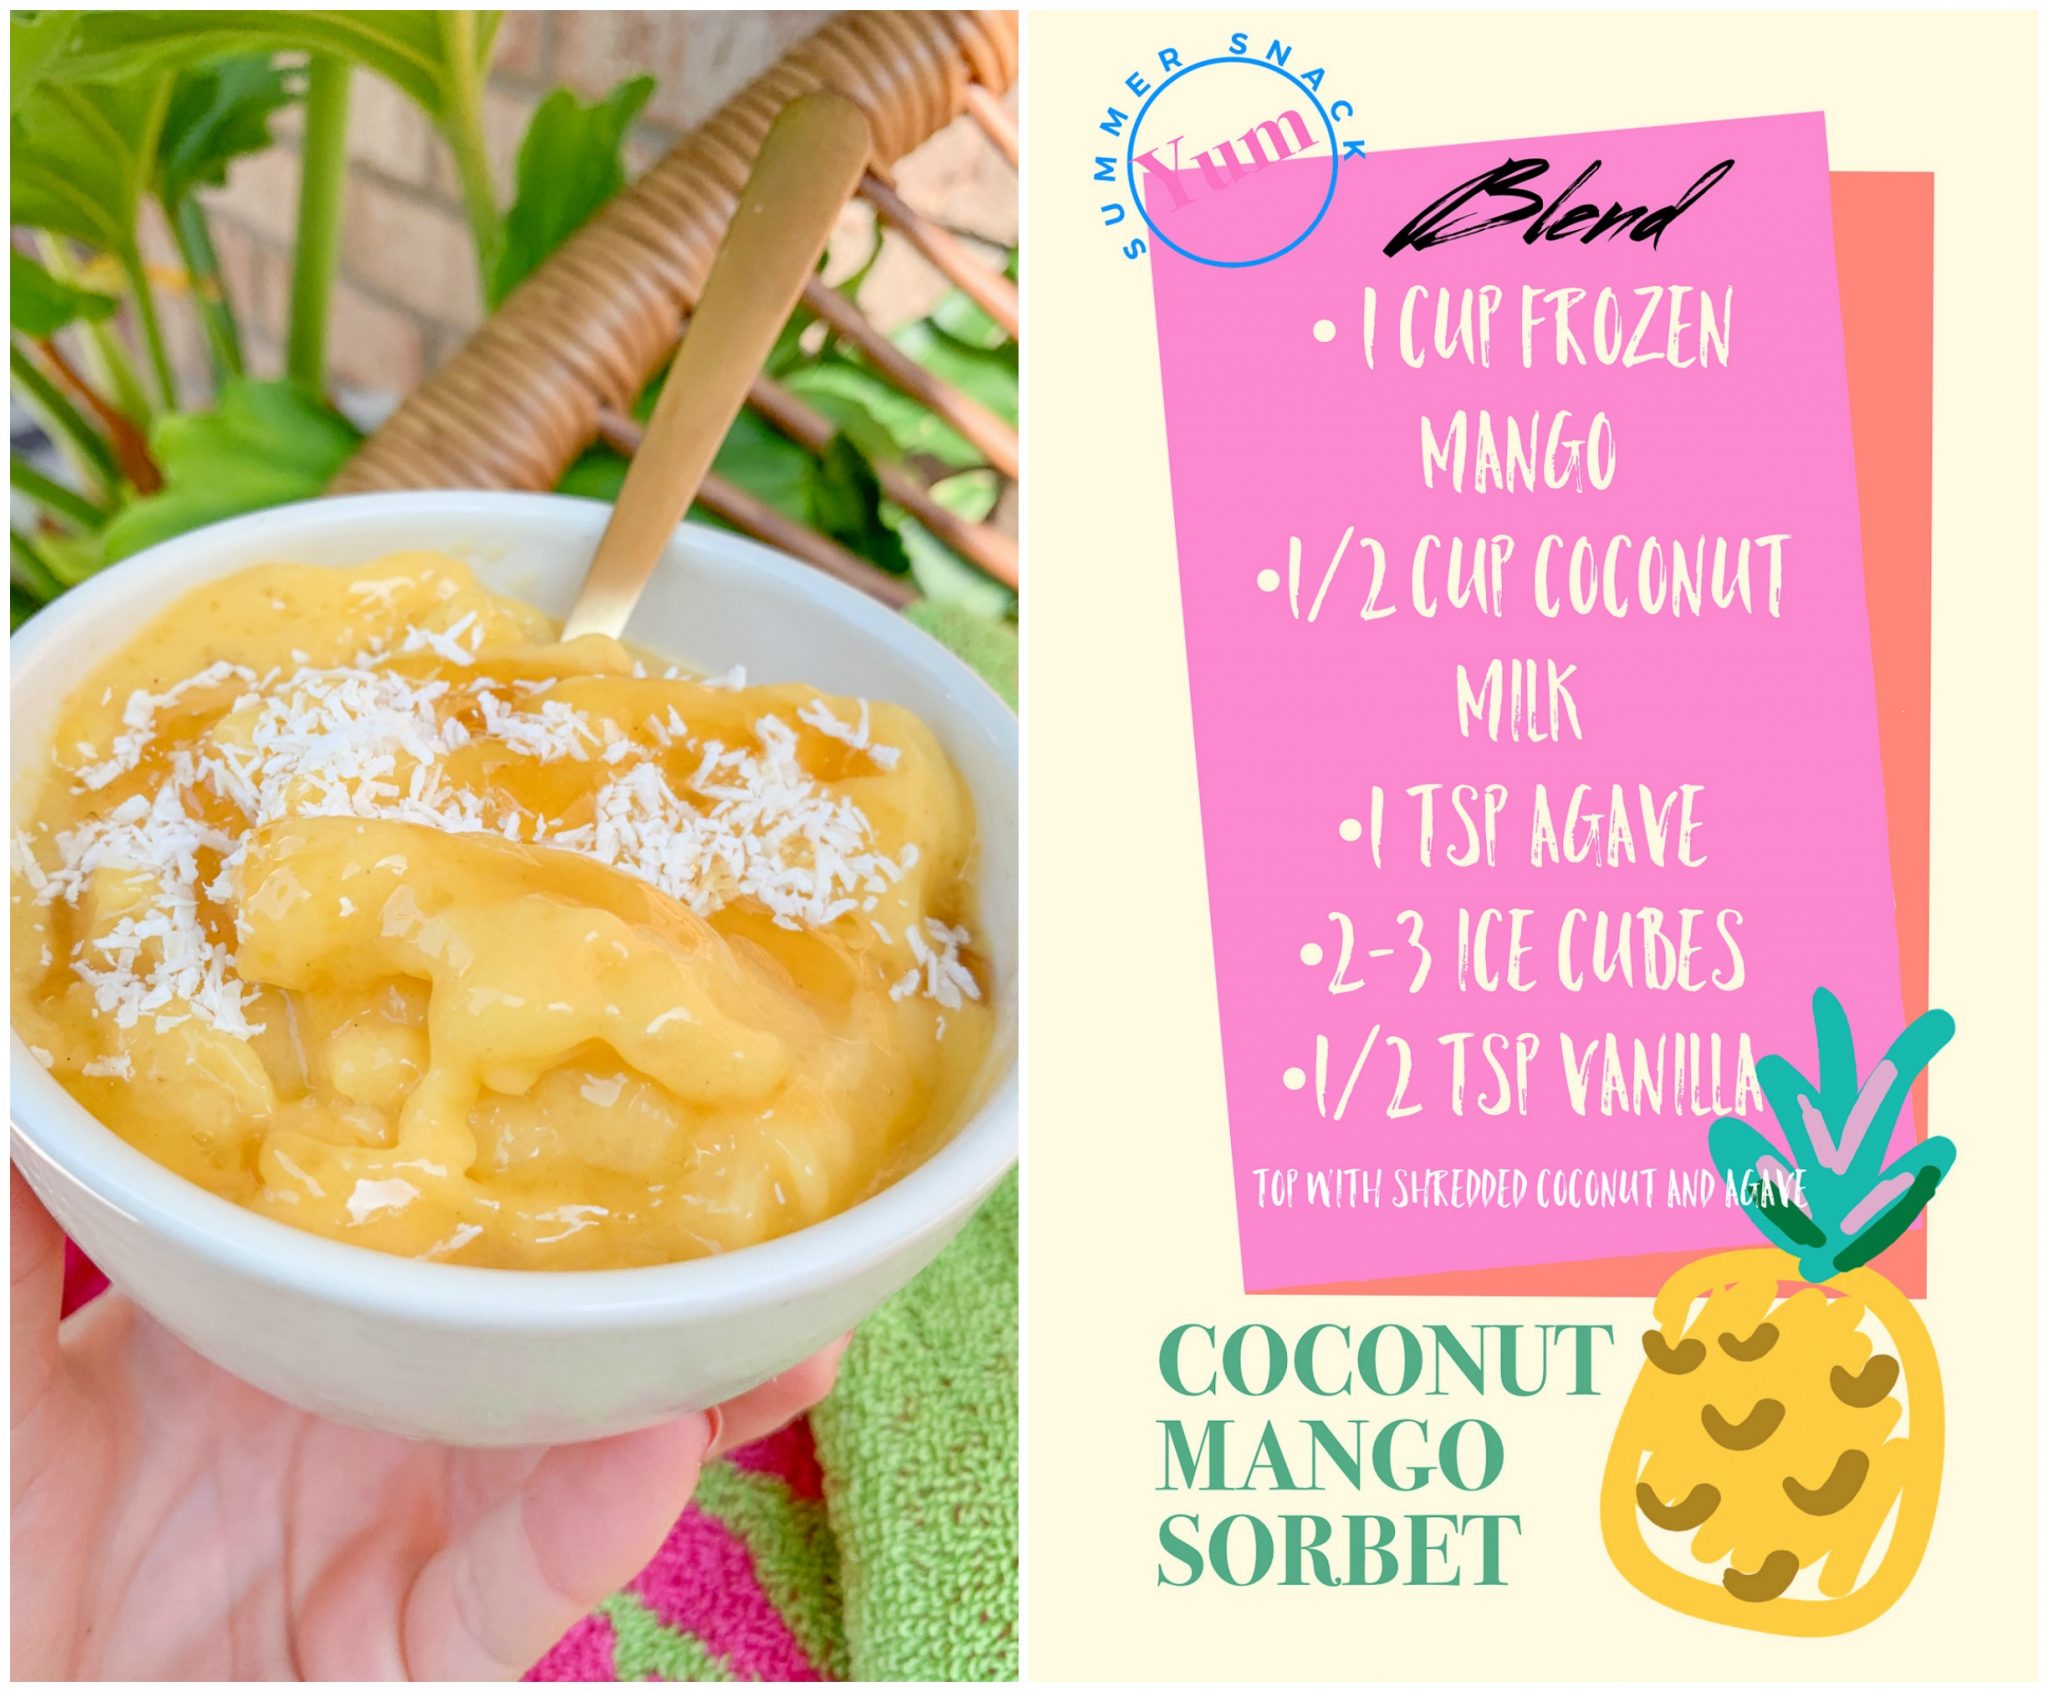 sorbet, mango, coconut, milk, vegan, dairy free, gluten free, healthy snacking